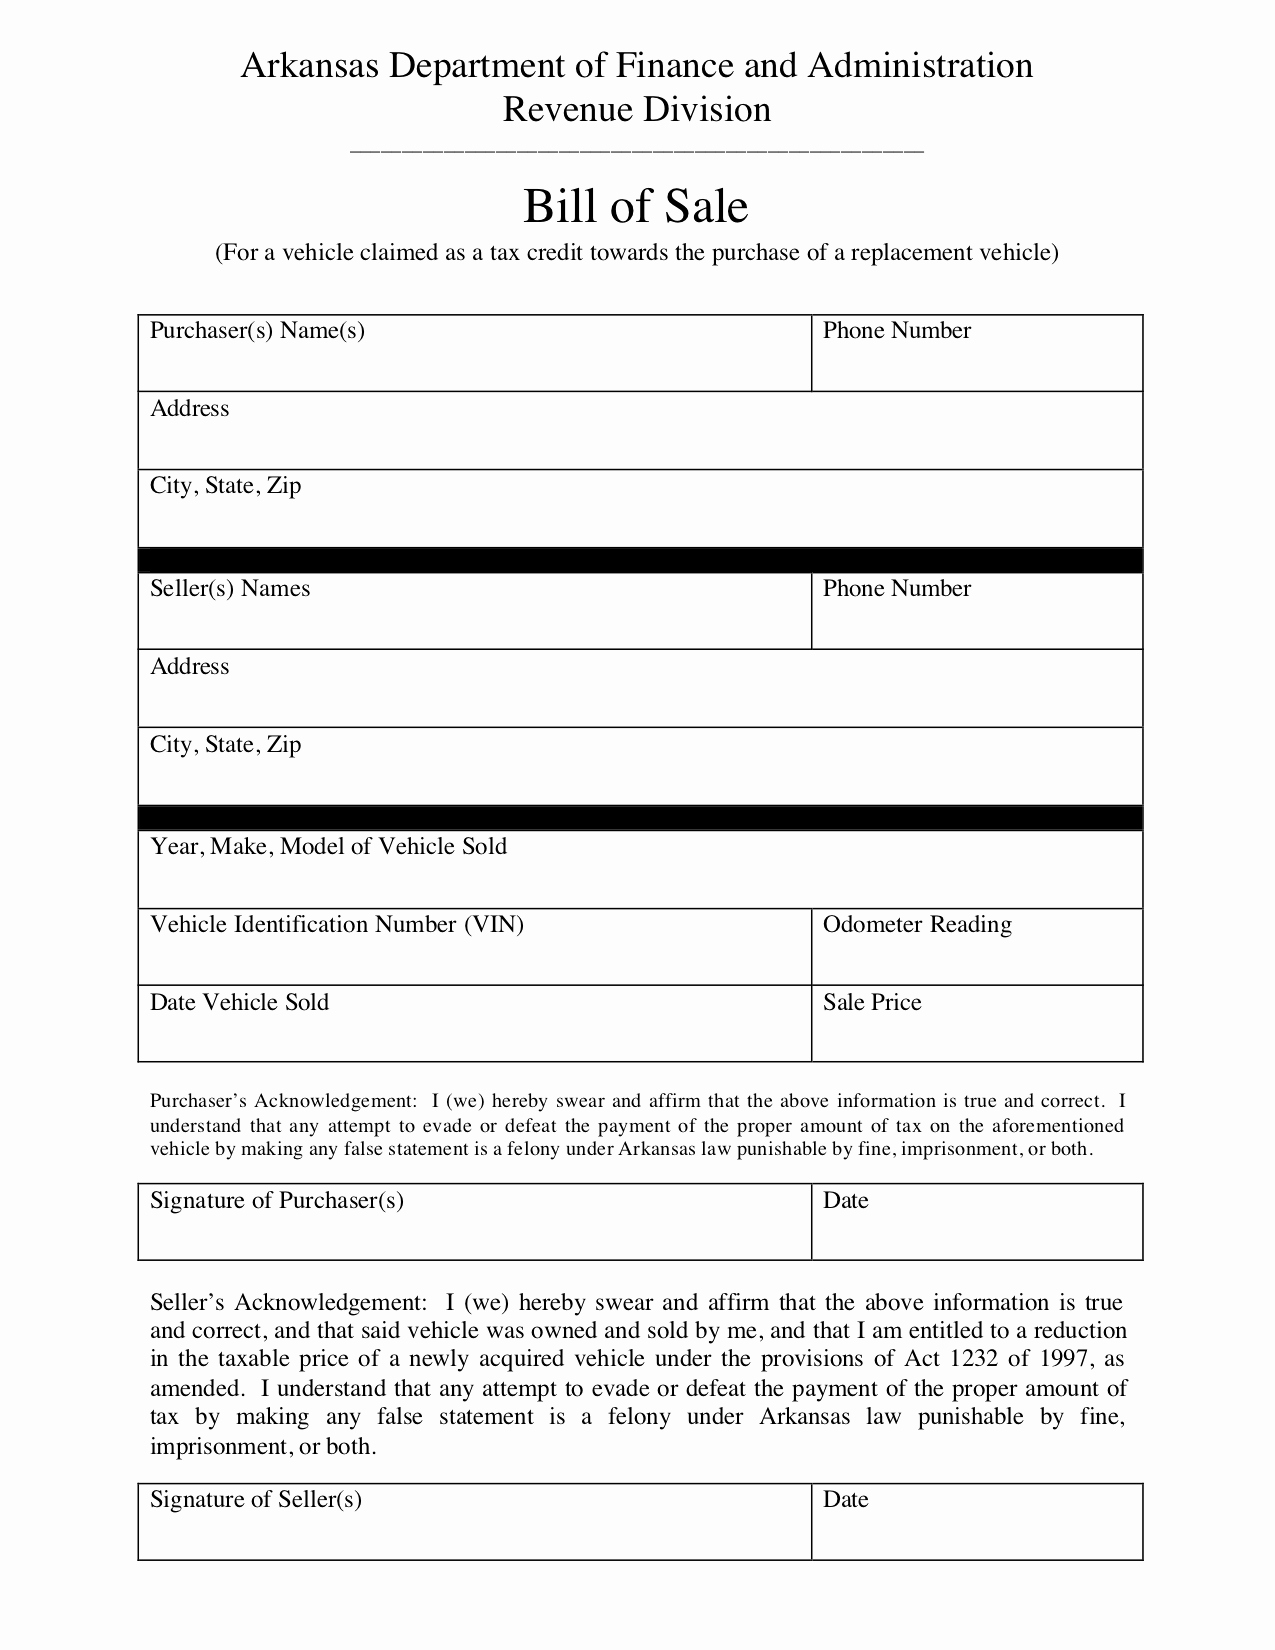 Selling Car Bill Of Sale Luxury Free Arkansas Bill Of Sale form Pdf Template